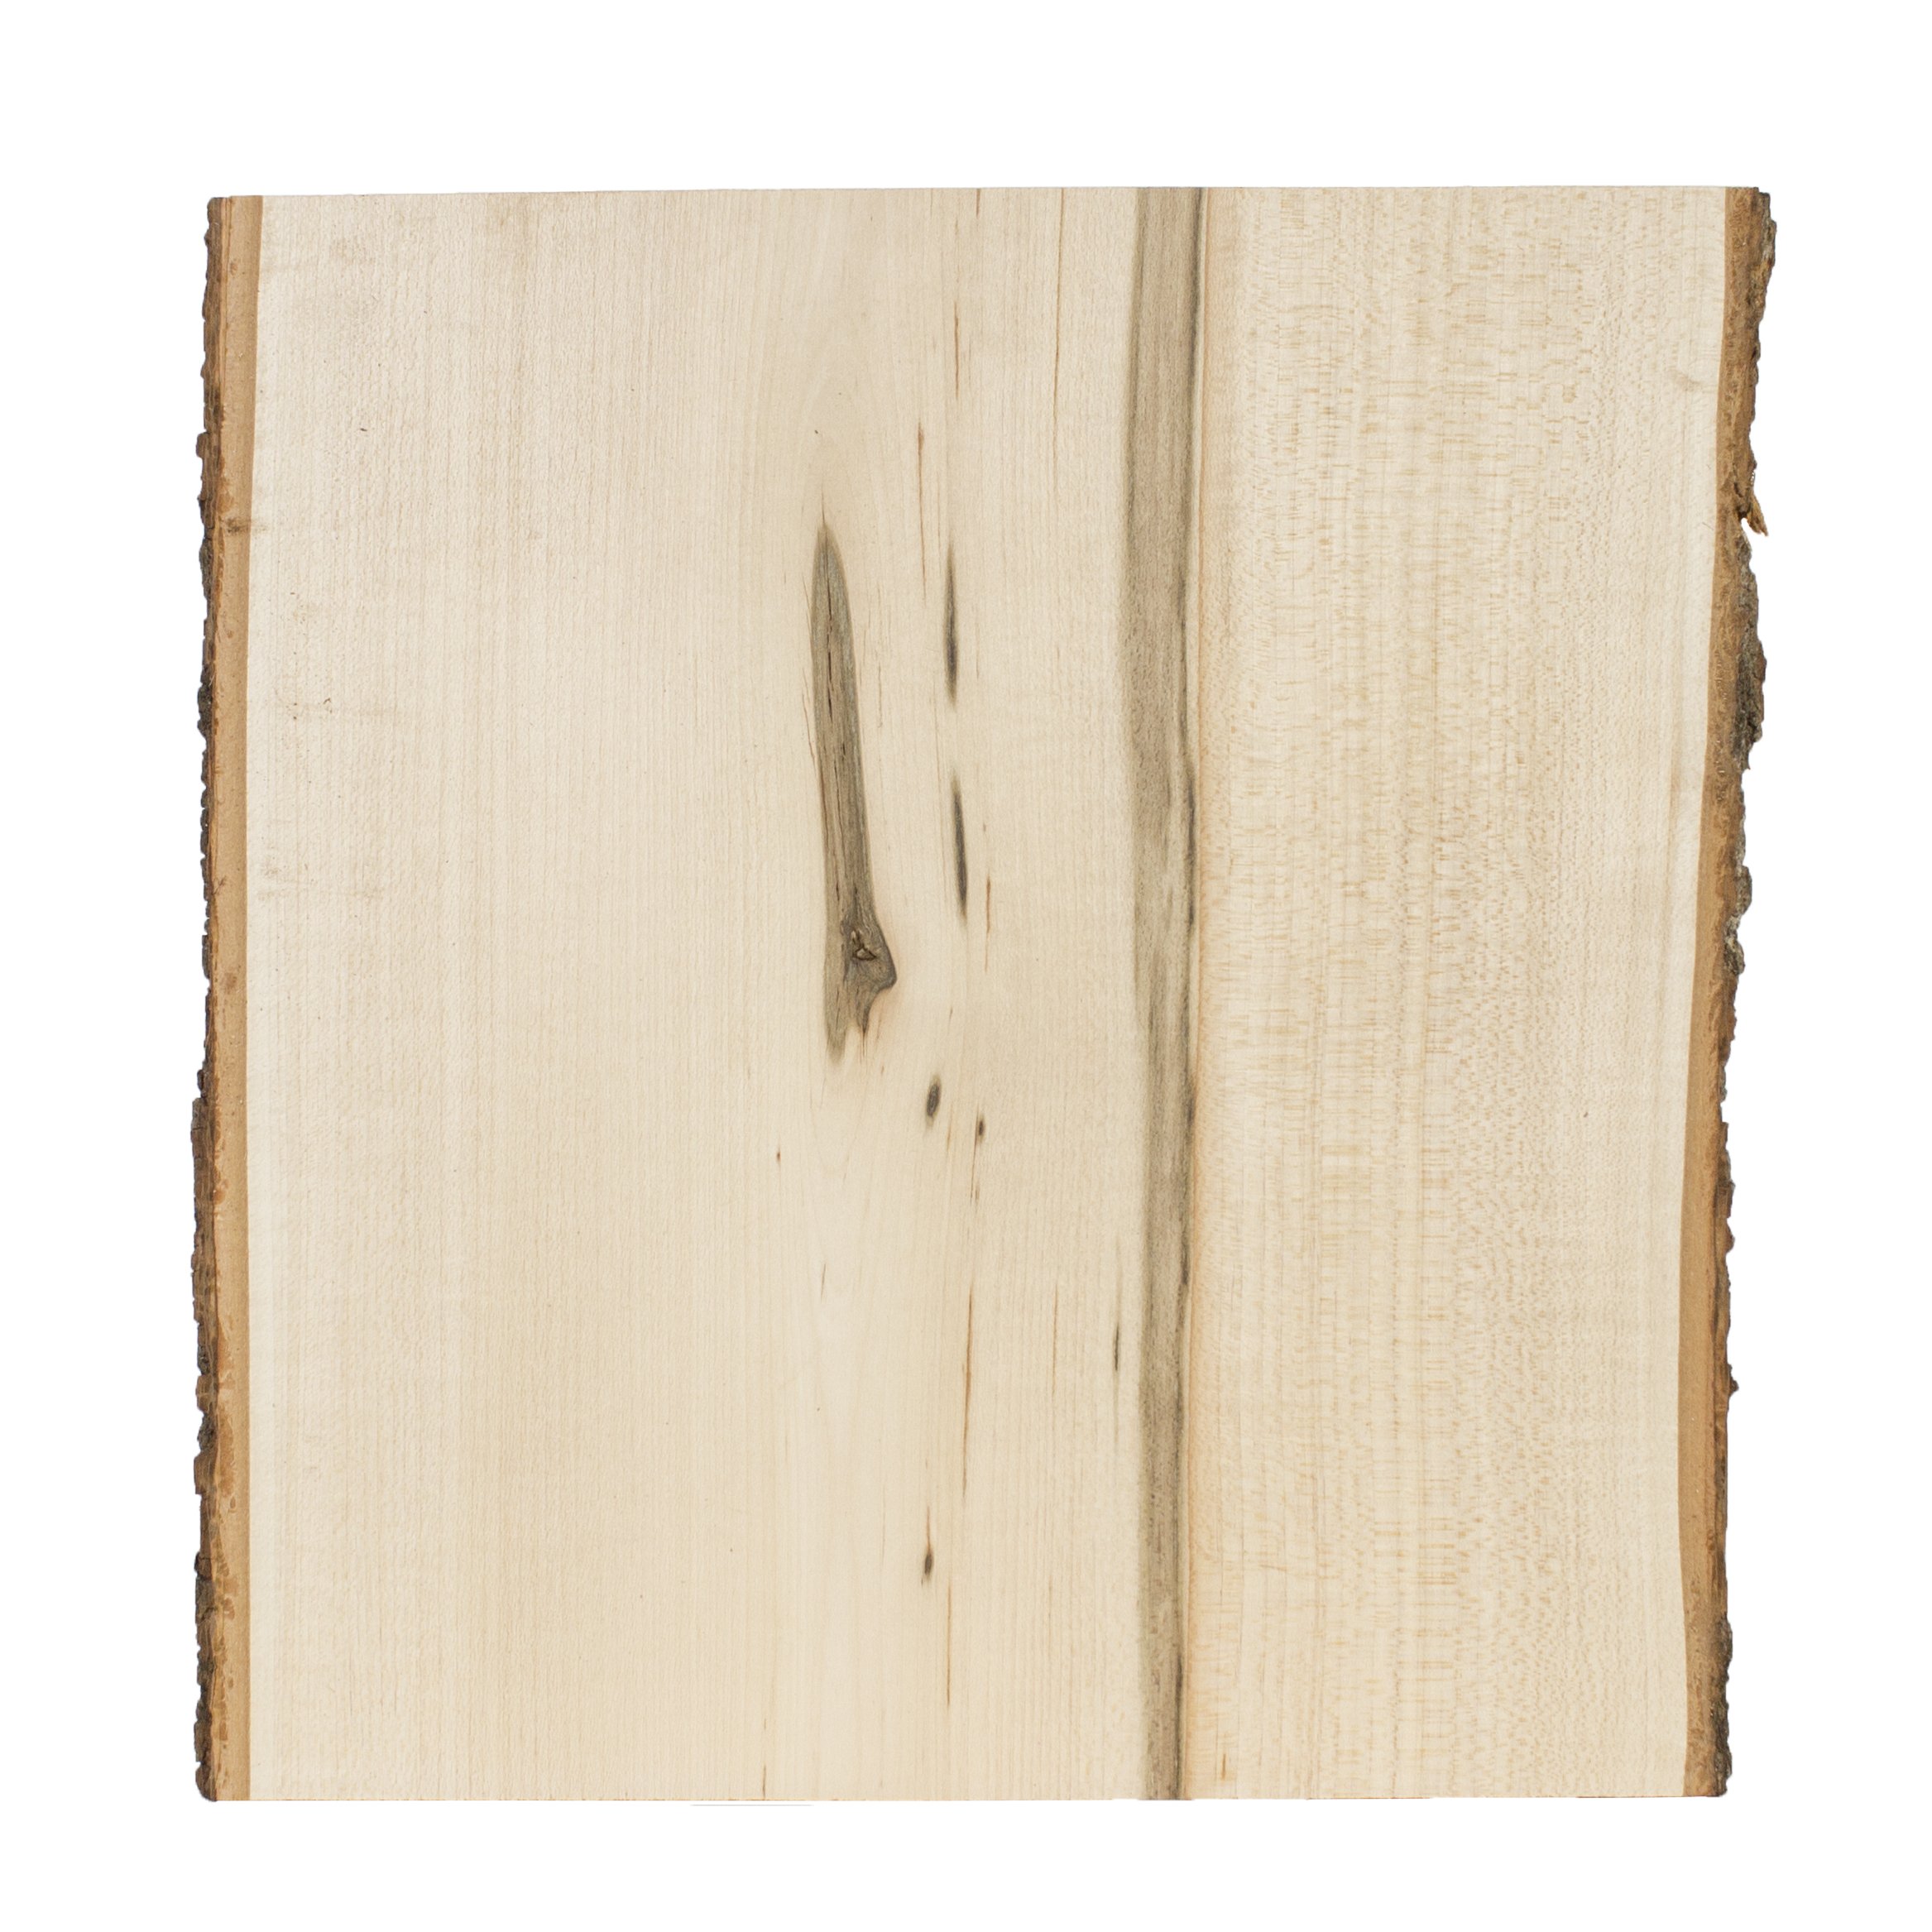 Walnut Hollow Rustic Basswood Plank, 11-13